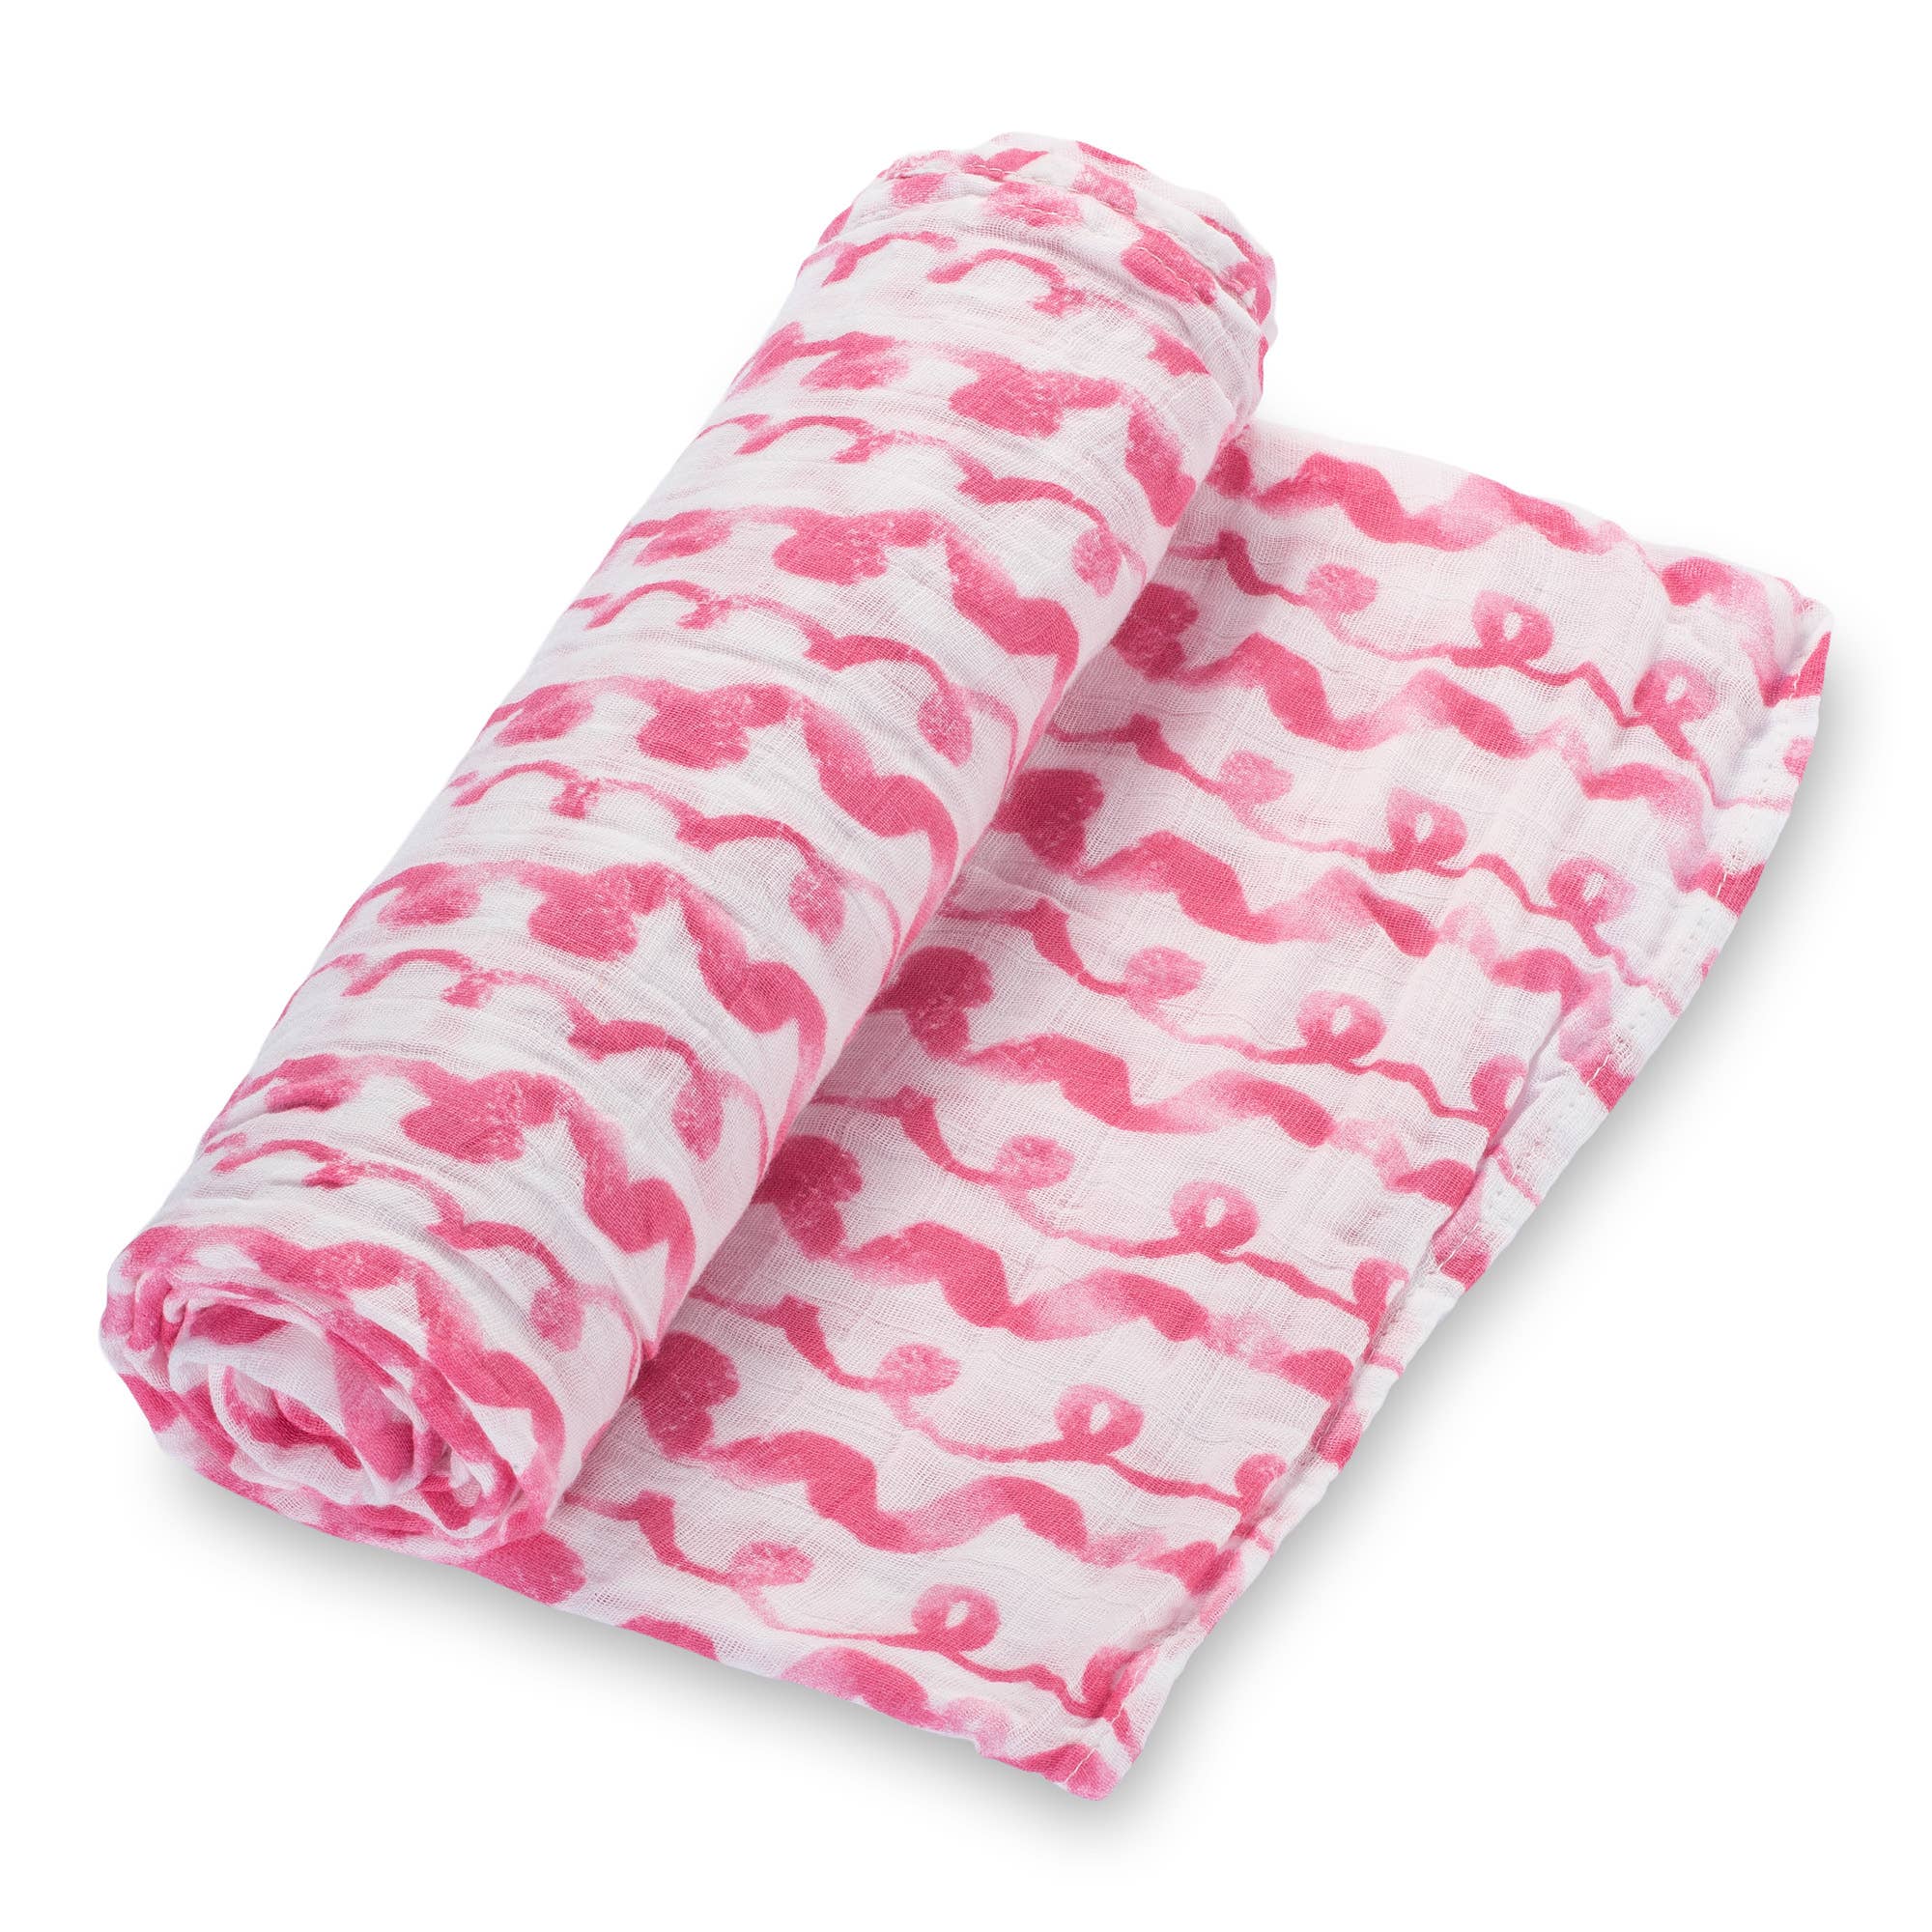 LollyBanks - Let's Flamingle - Baby Swaddle Blanket Set